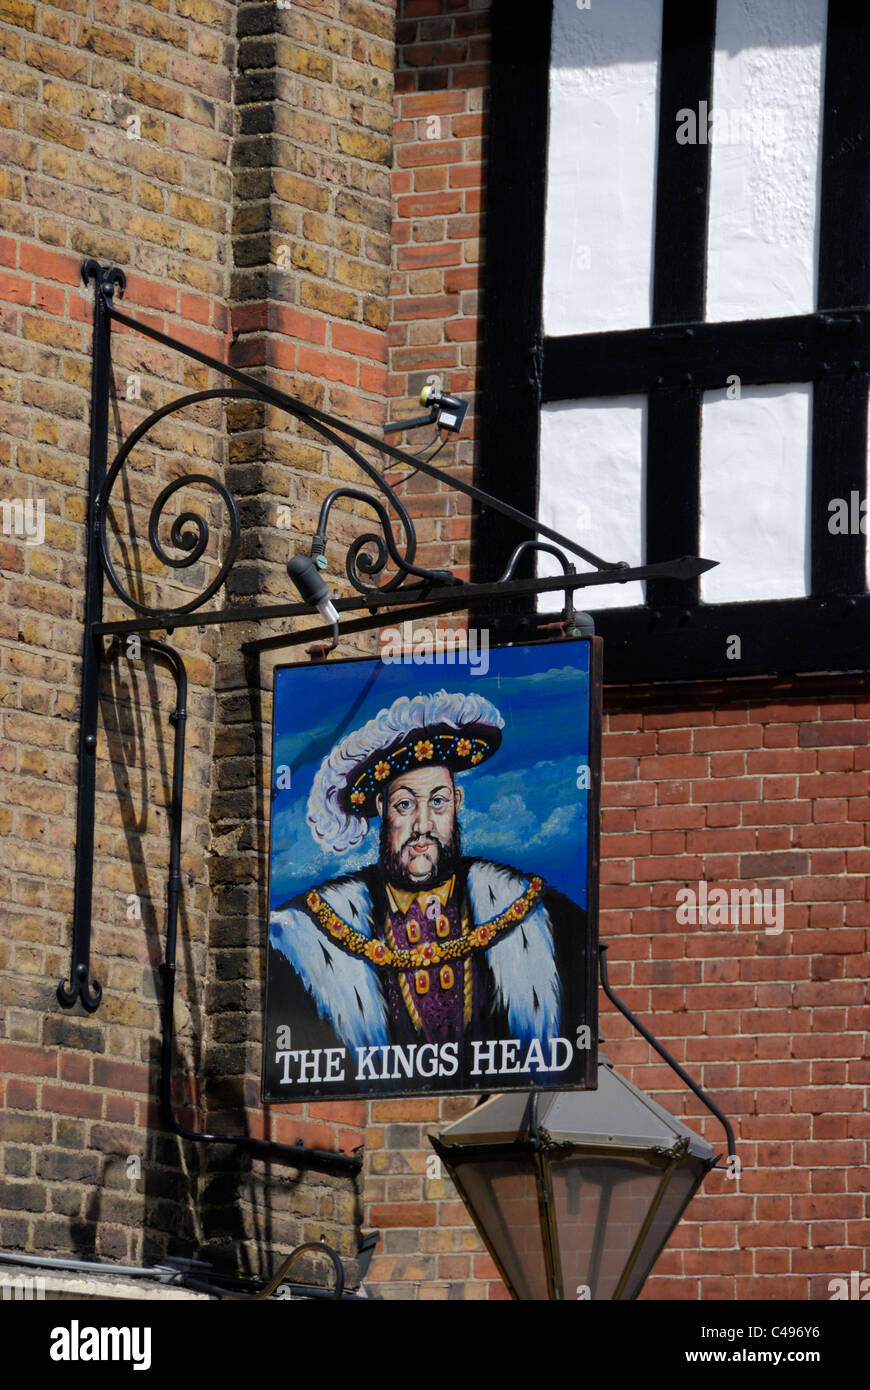 The Kings Head pub in High Barnet, London, England Stock Photo